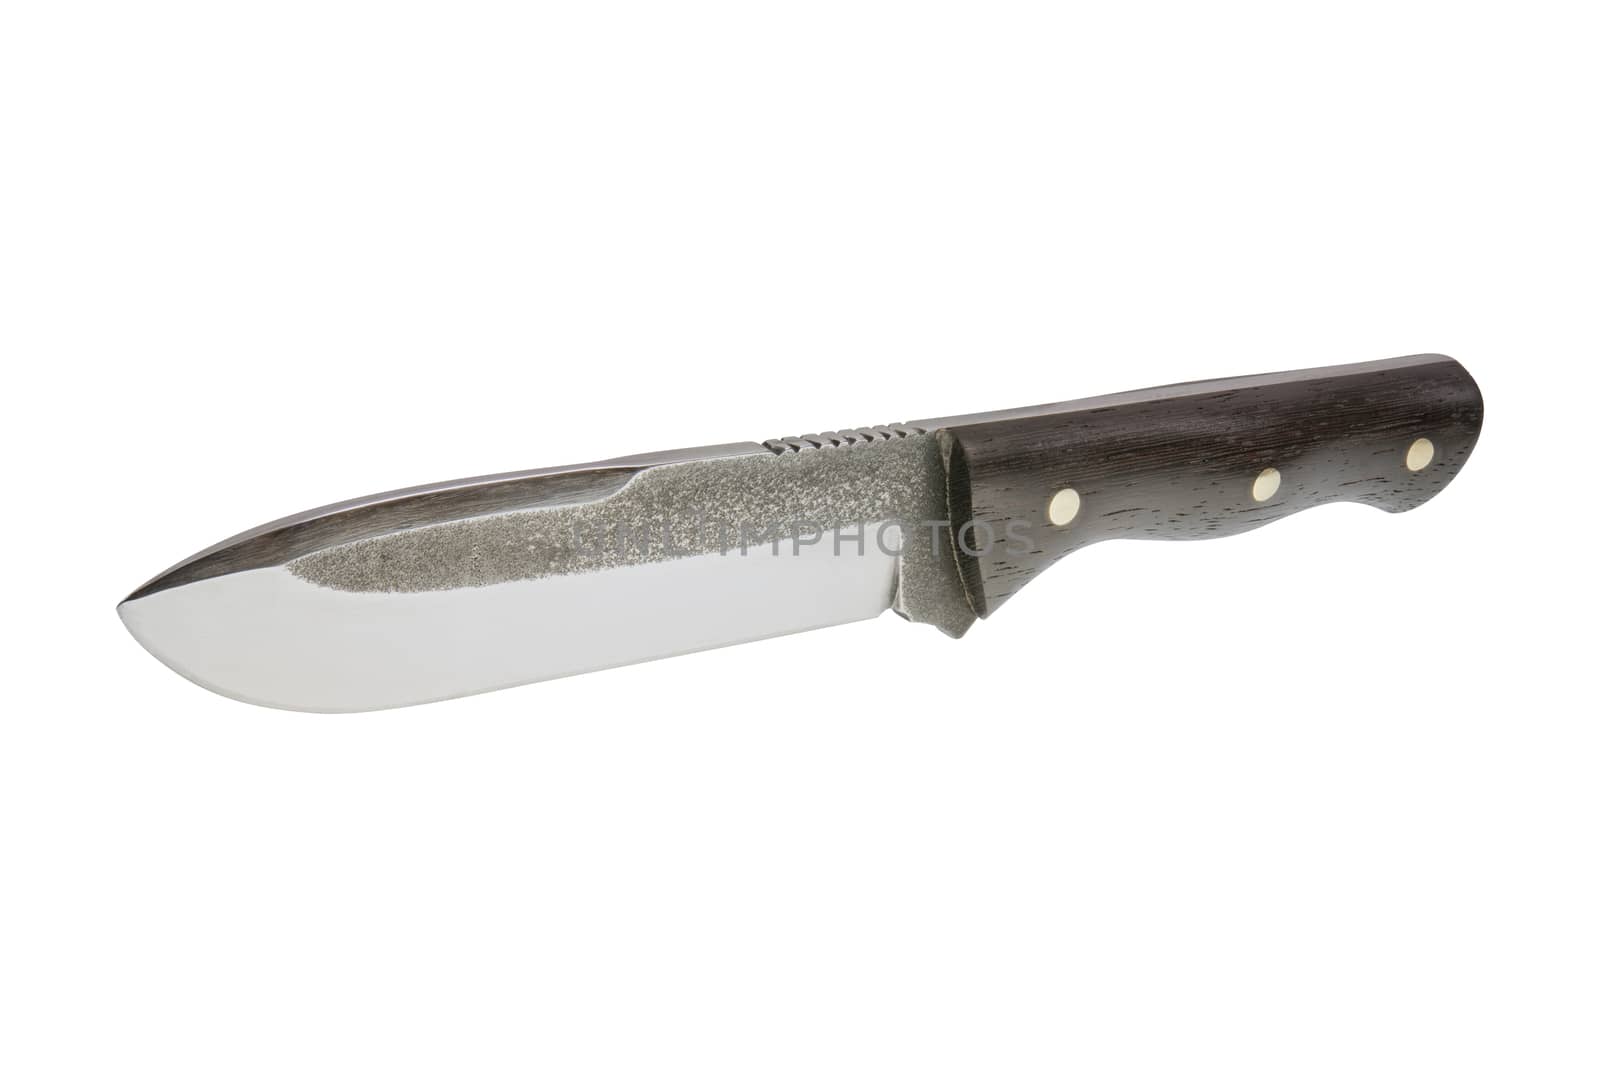 Defense knife on a white background by neryx